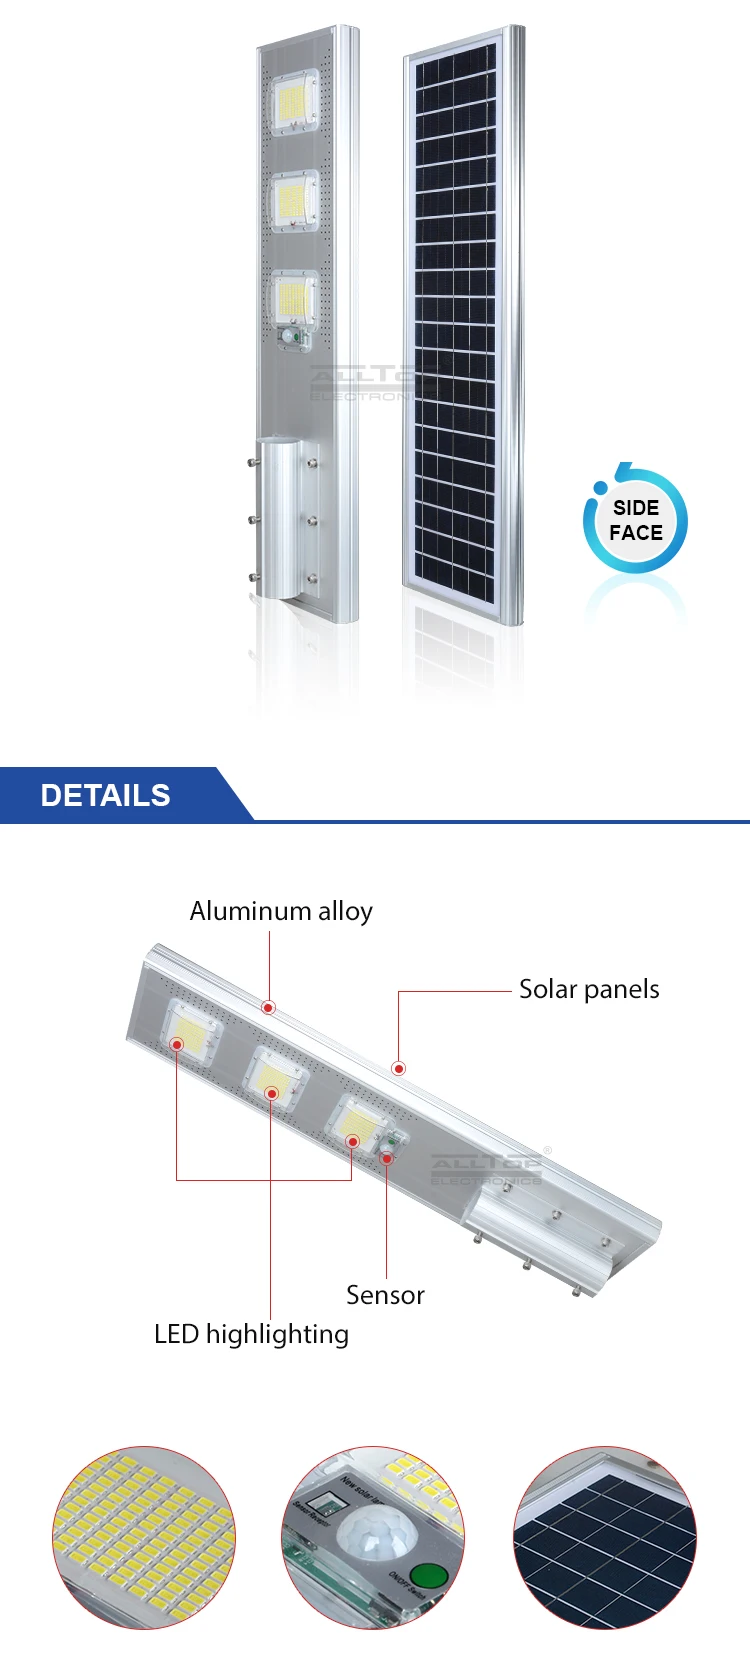 ALLTOP Energy saving IP65 outdoor solar motion controller 60 120 180 W all in one led solar streetlight price list